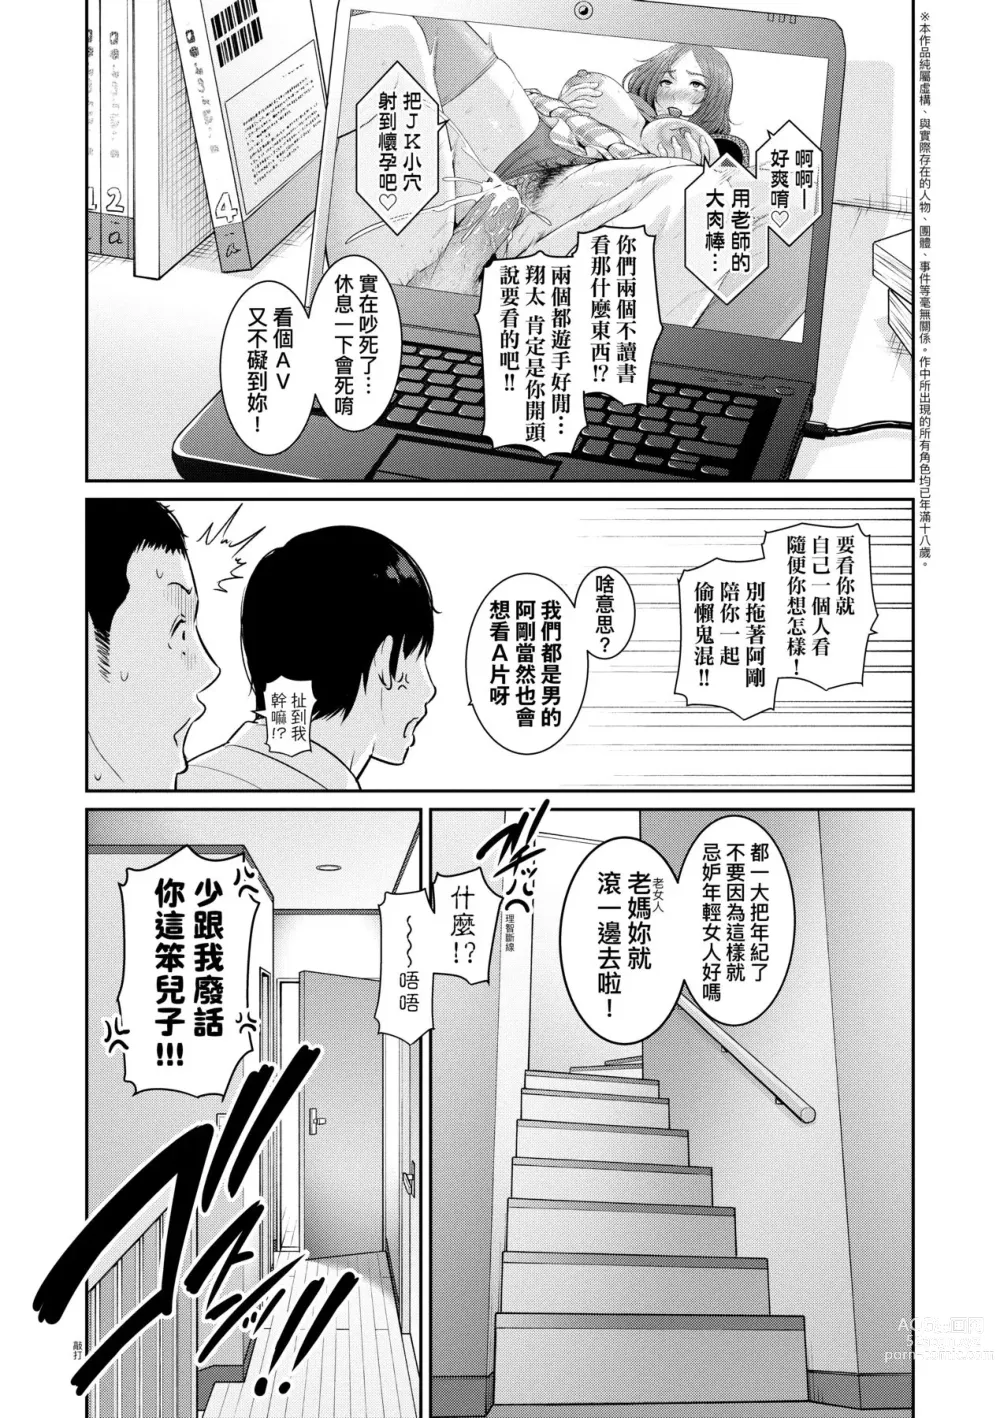 Page 6 of manga 續．朋友的馬麻